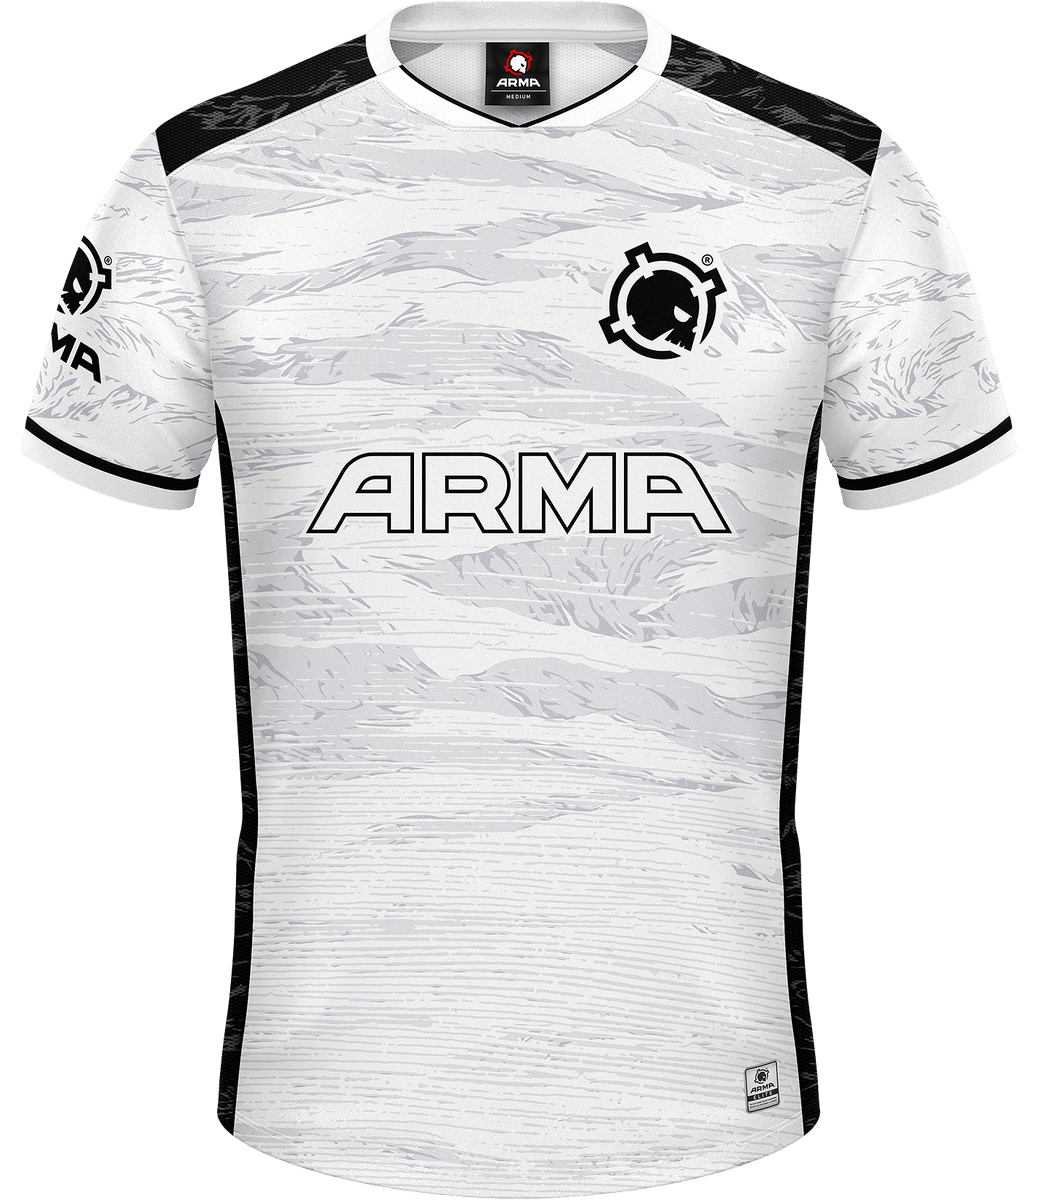 ARMA ELITE Jersey - White Camo - Custom Esports Jersey by ARMA